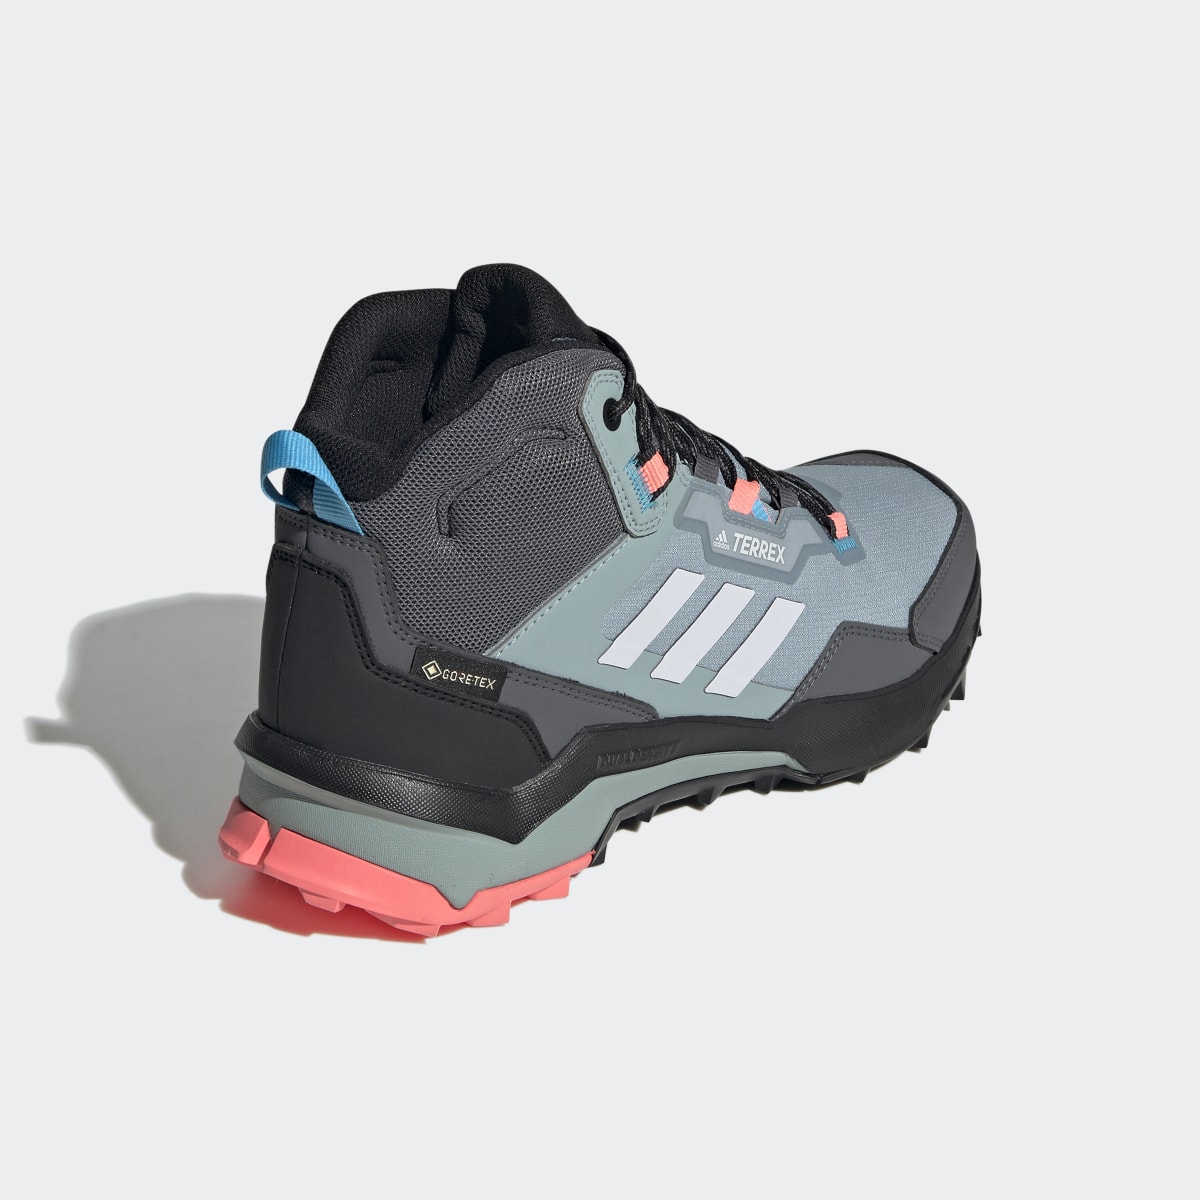 Adidas Sapatilhas de Caminhada AX4 Mid GORE-TEX TERREX. 9